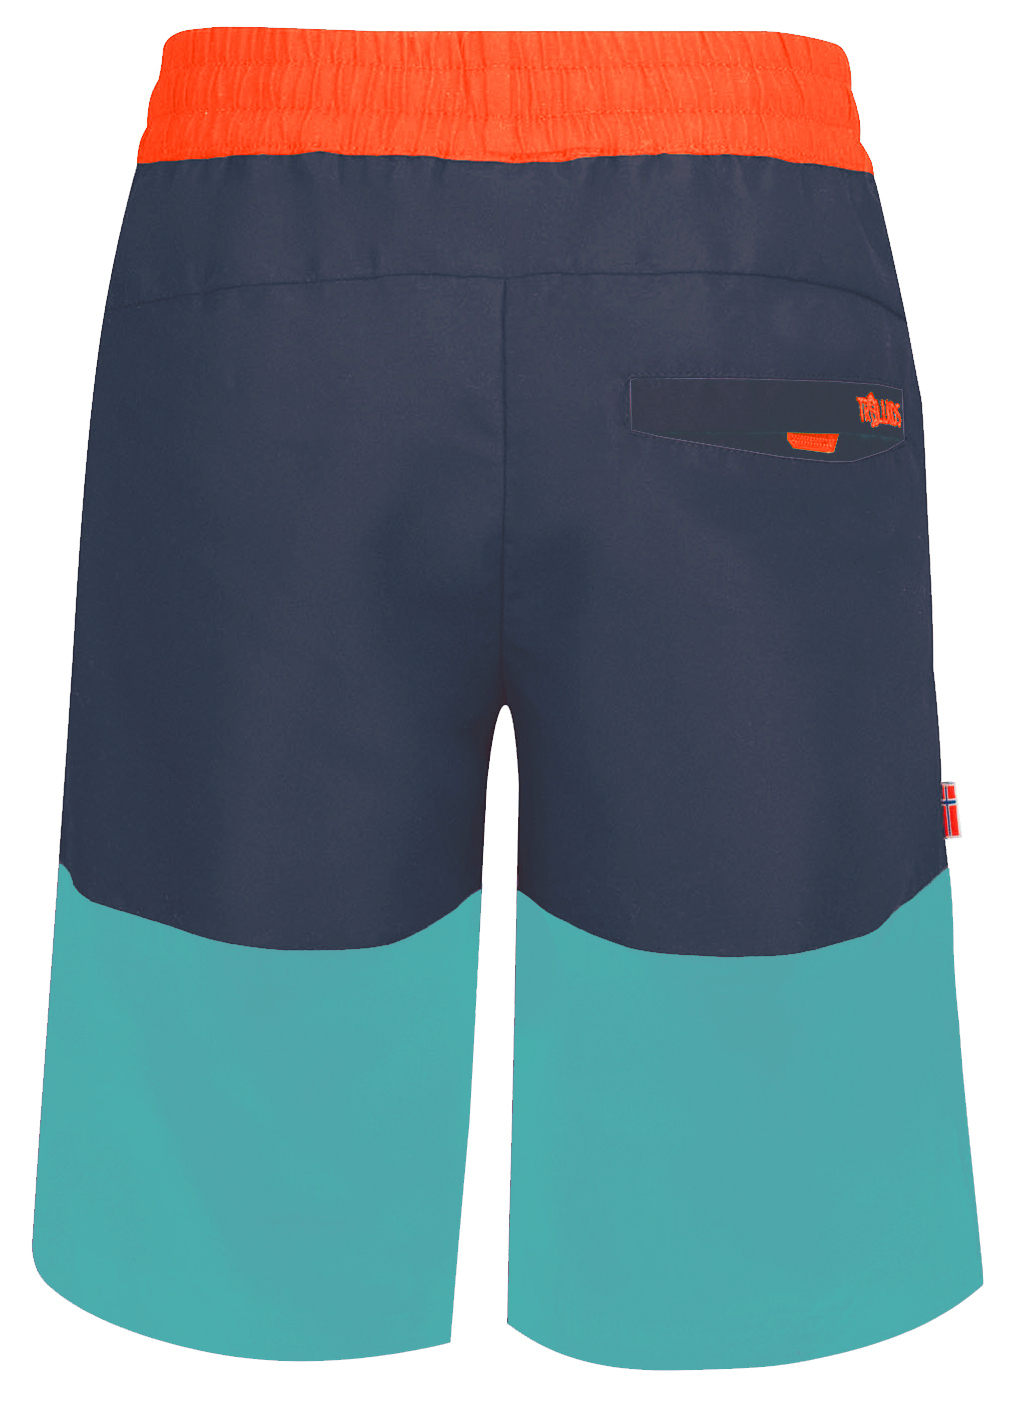 Trollkids Kroksand UV-Bade Shorts dark navy/glow orange